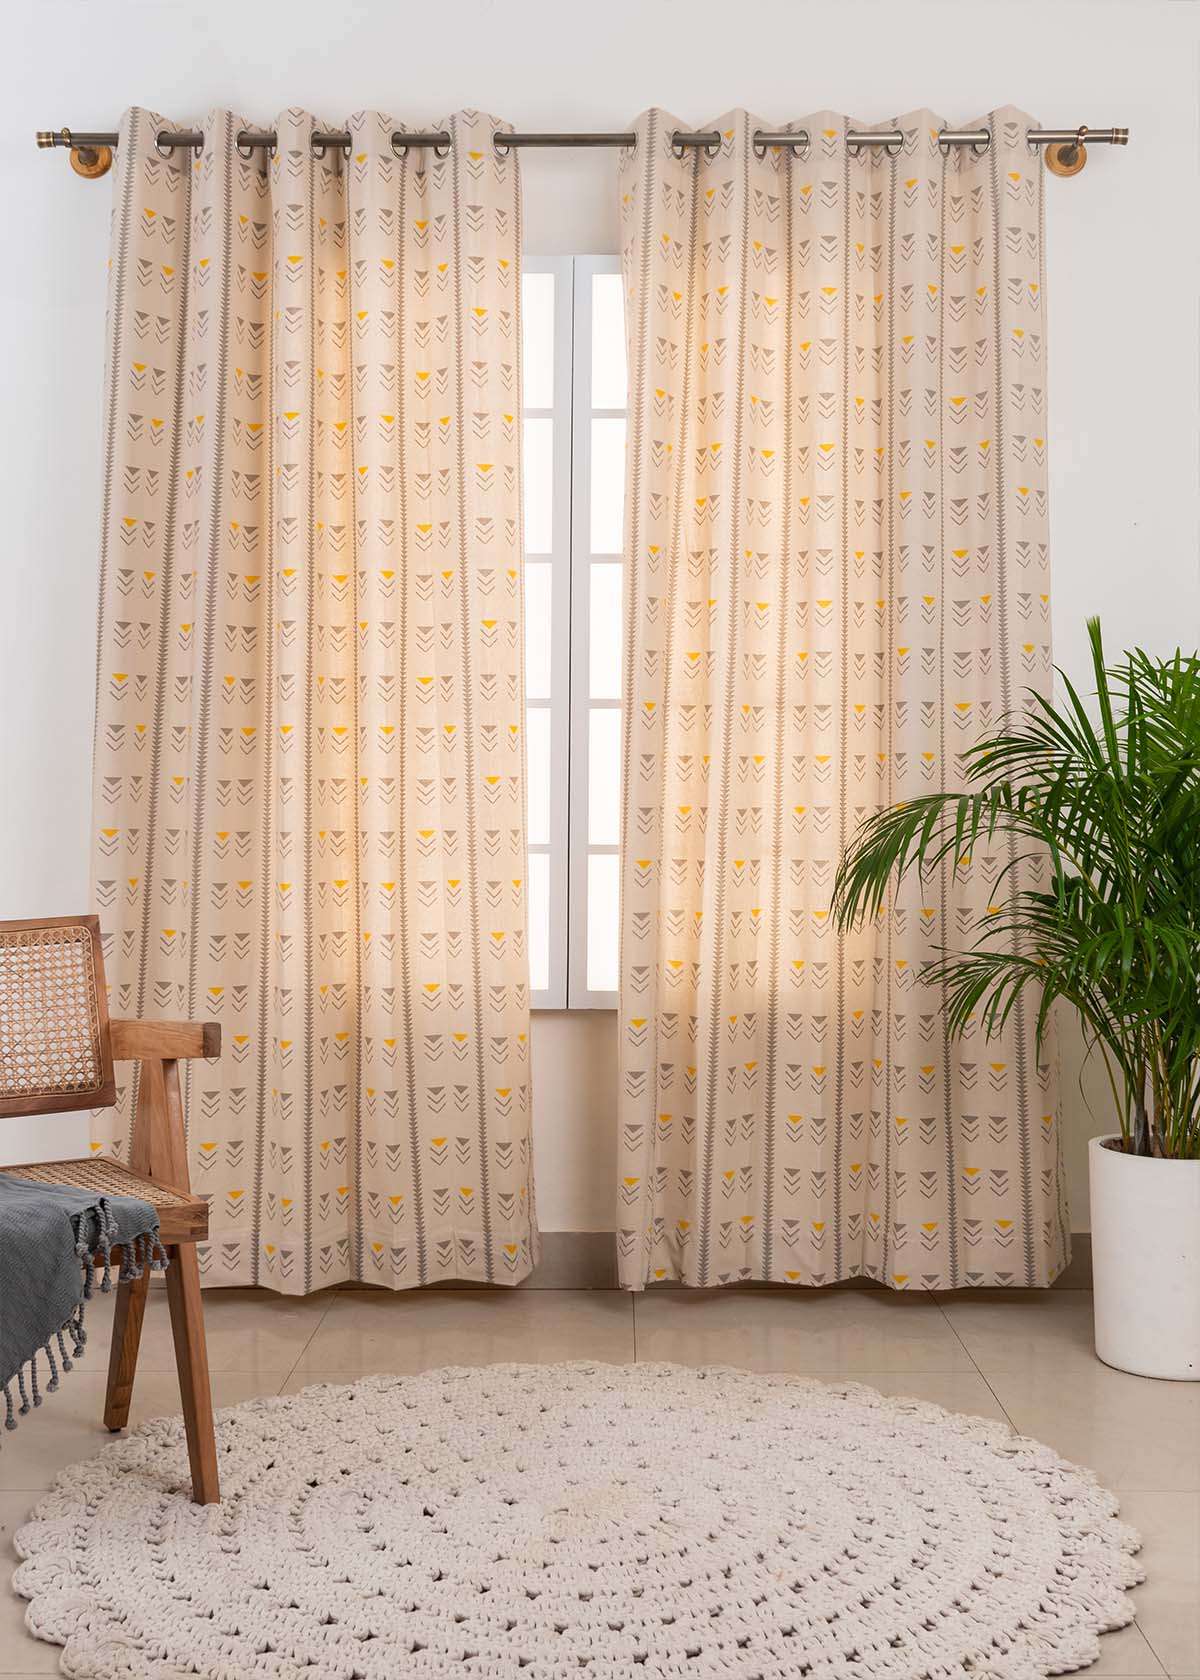 Mudline Printed 100% cotton ethnic curtain for living room - Room darkening - Mustard - Pack of 1